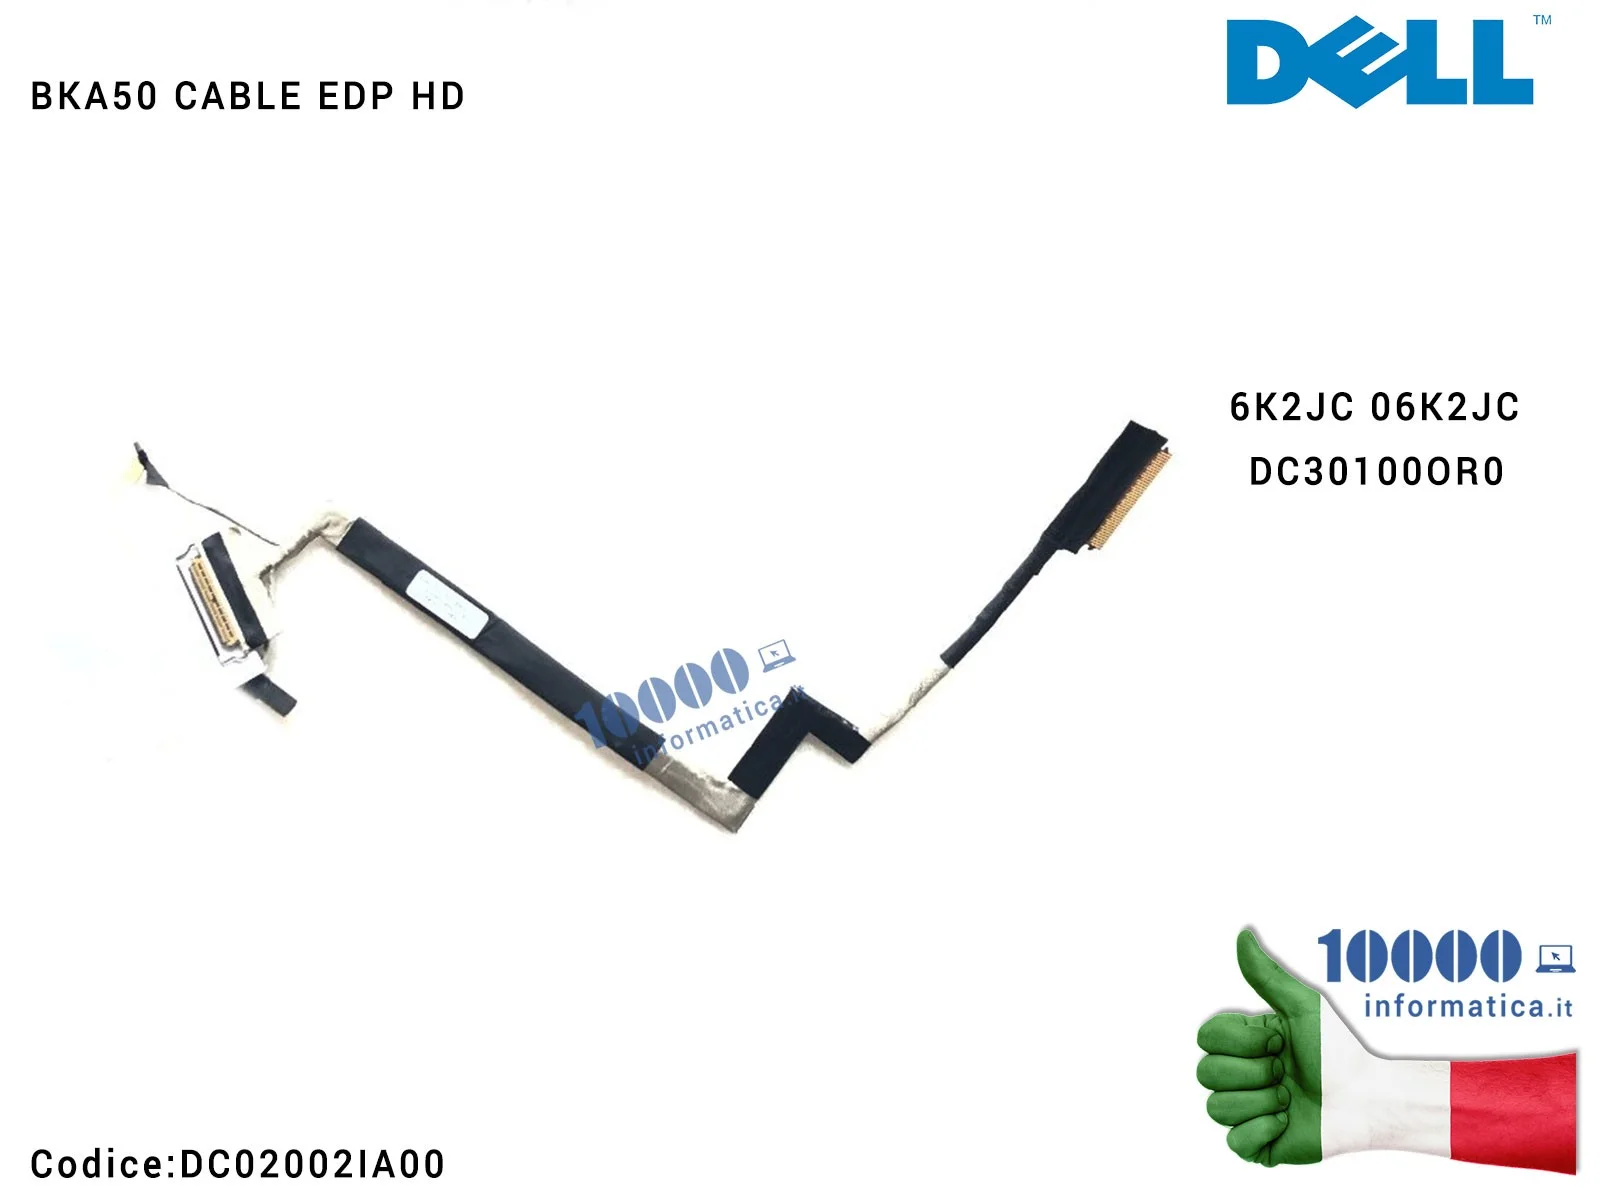 DC02002IA00 Cavo Flat LCD DELL Inspiron 15 7560 BKA50 EDP HD 6K2JC 06K2JC DC02002IA00